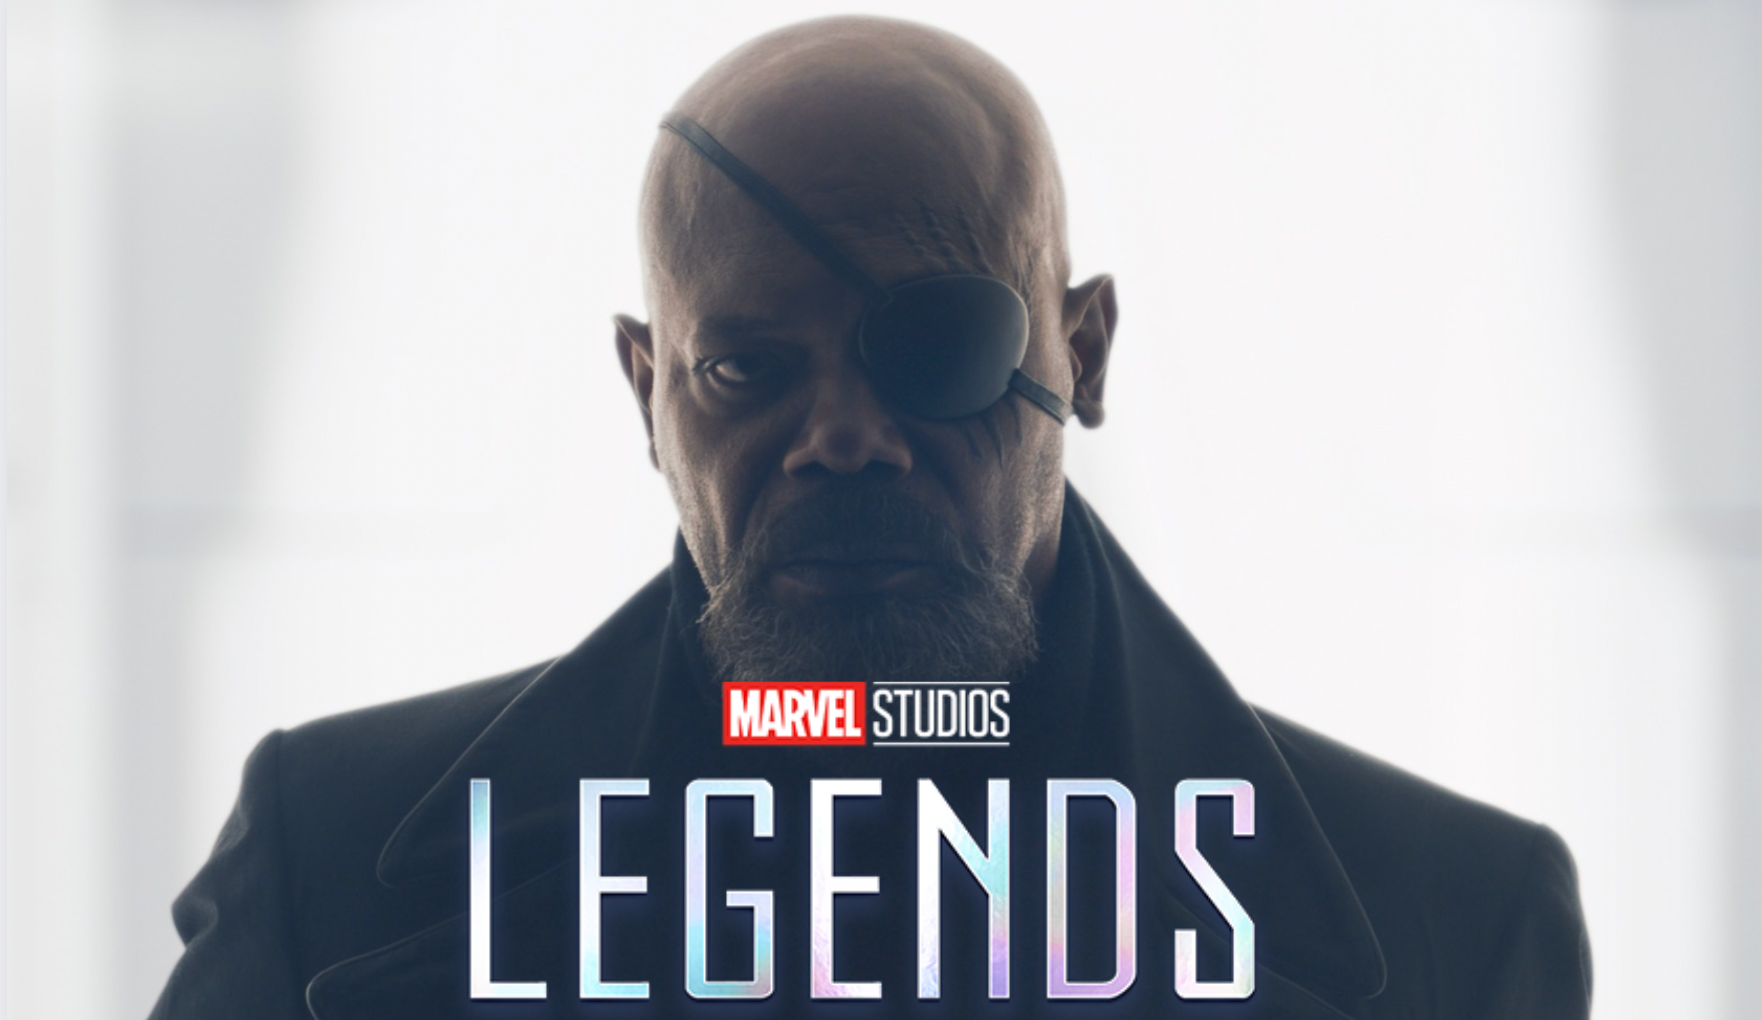 New “Marvel Studios: Legends” Episodes Coming Soon To Disney+